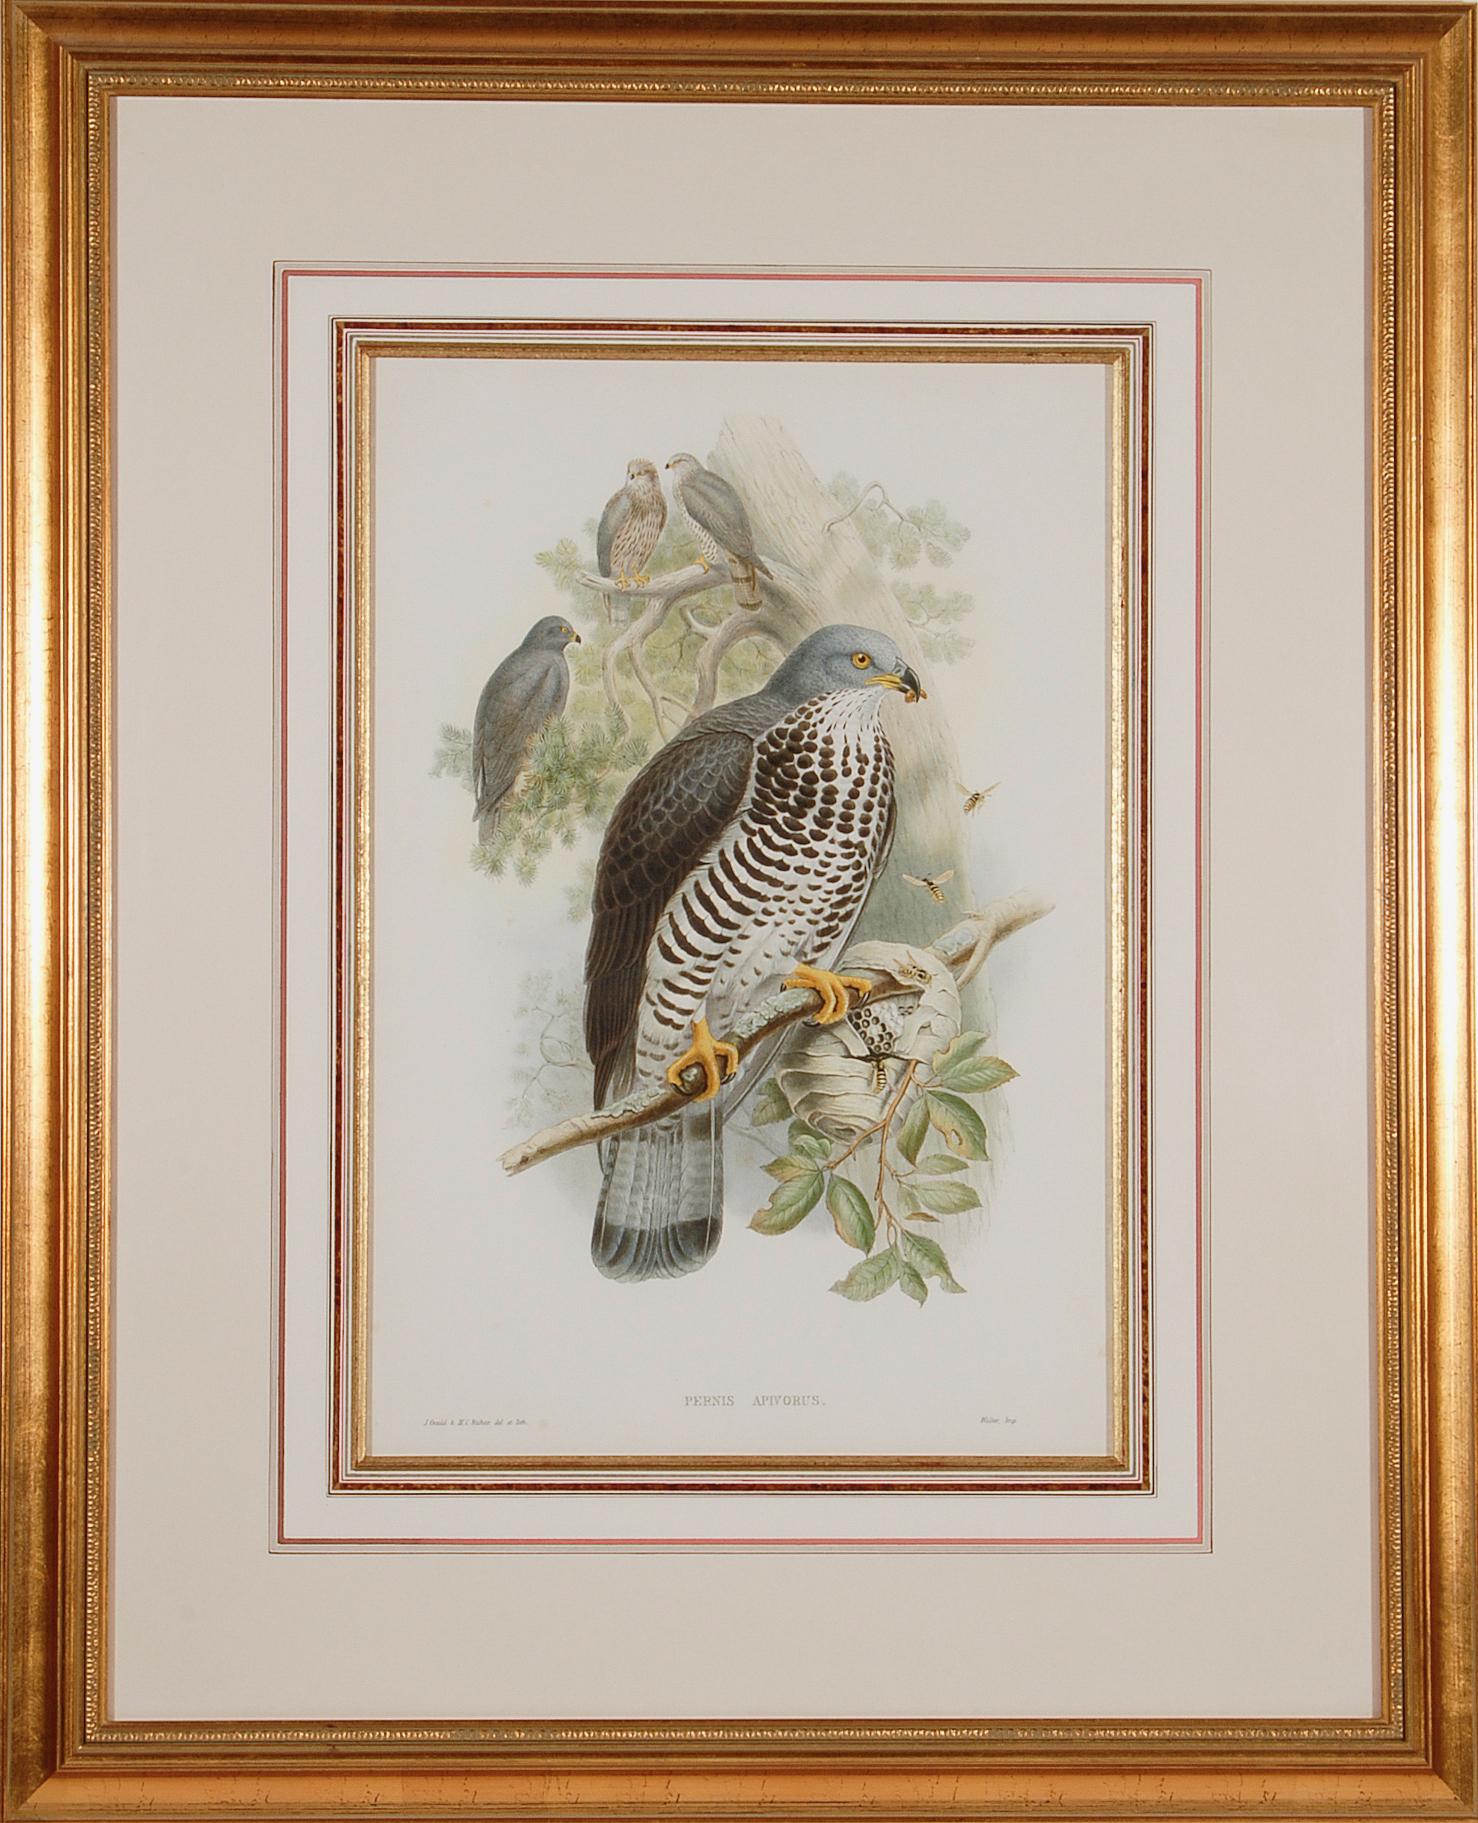 Honey Buzzard Bird: A Framed Original 19th C. Hand-colored Lithograph by Gould